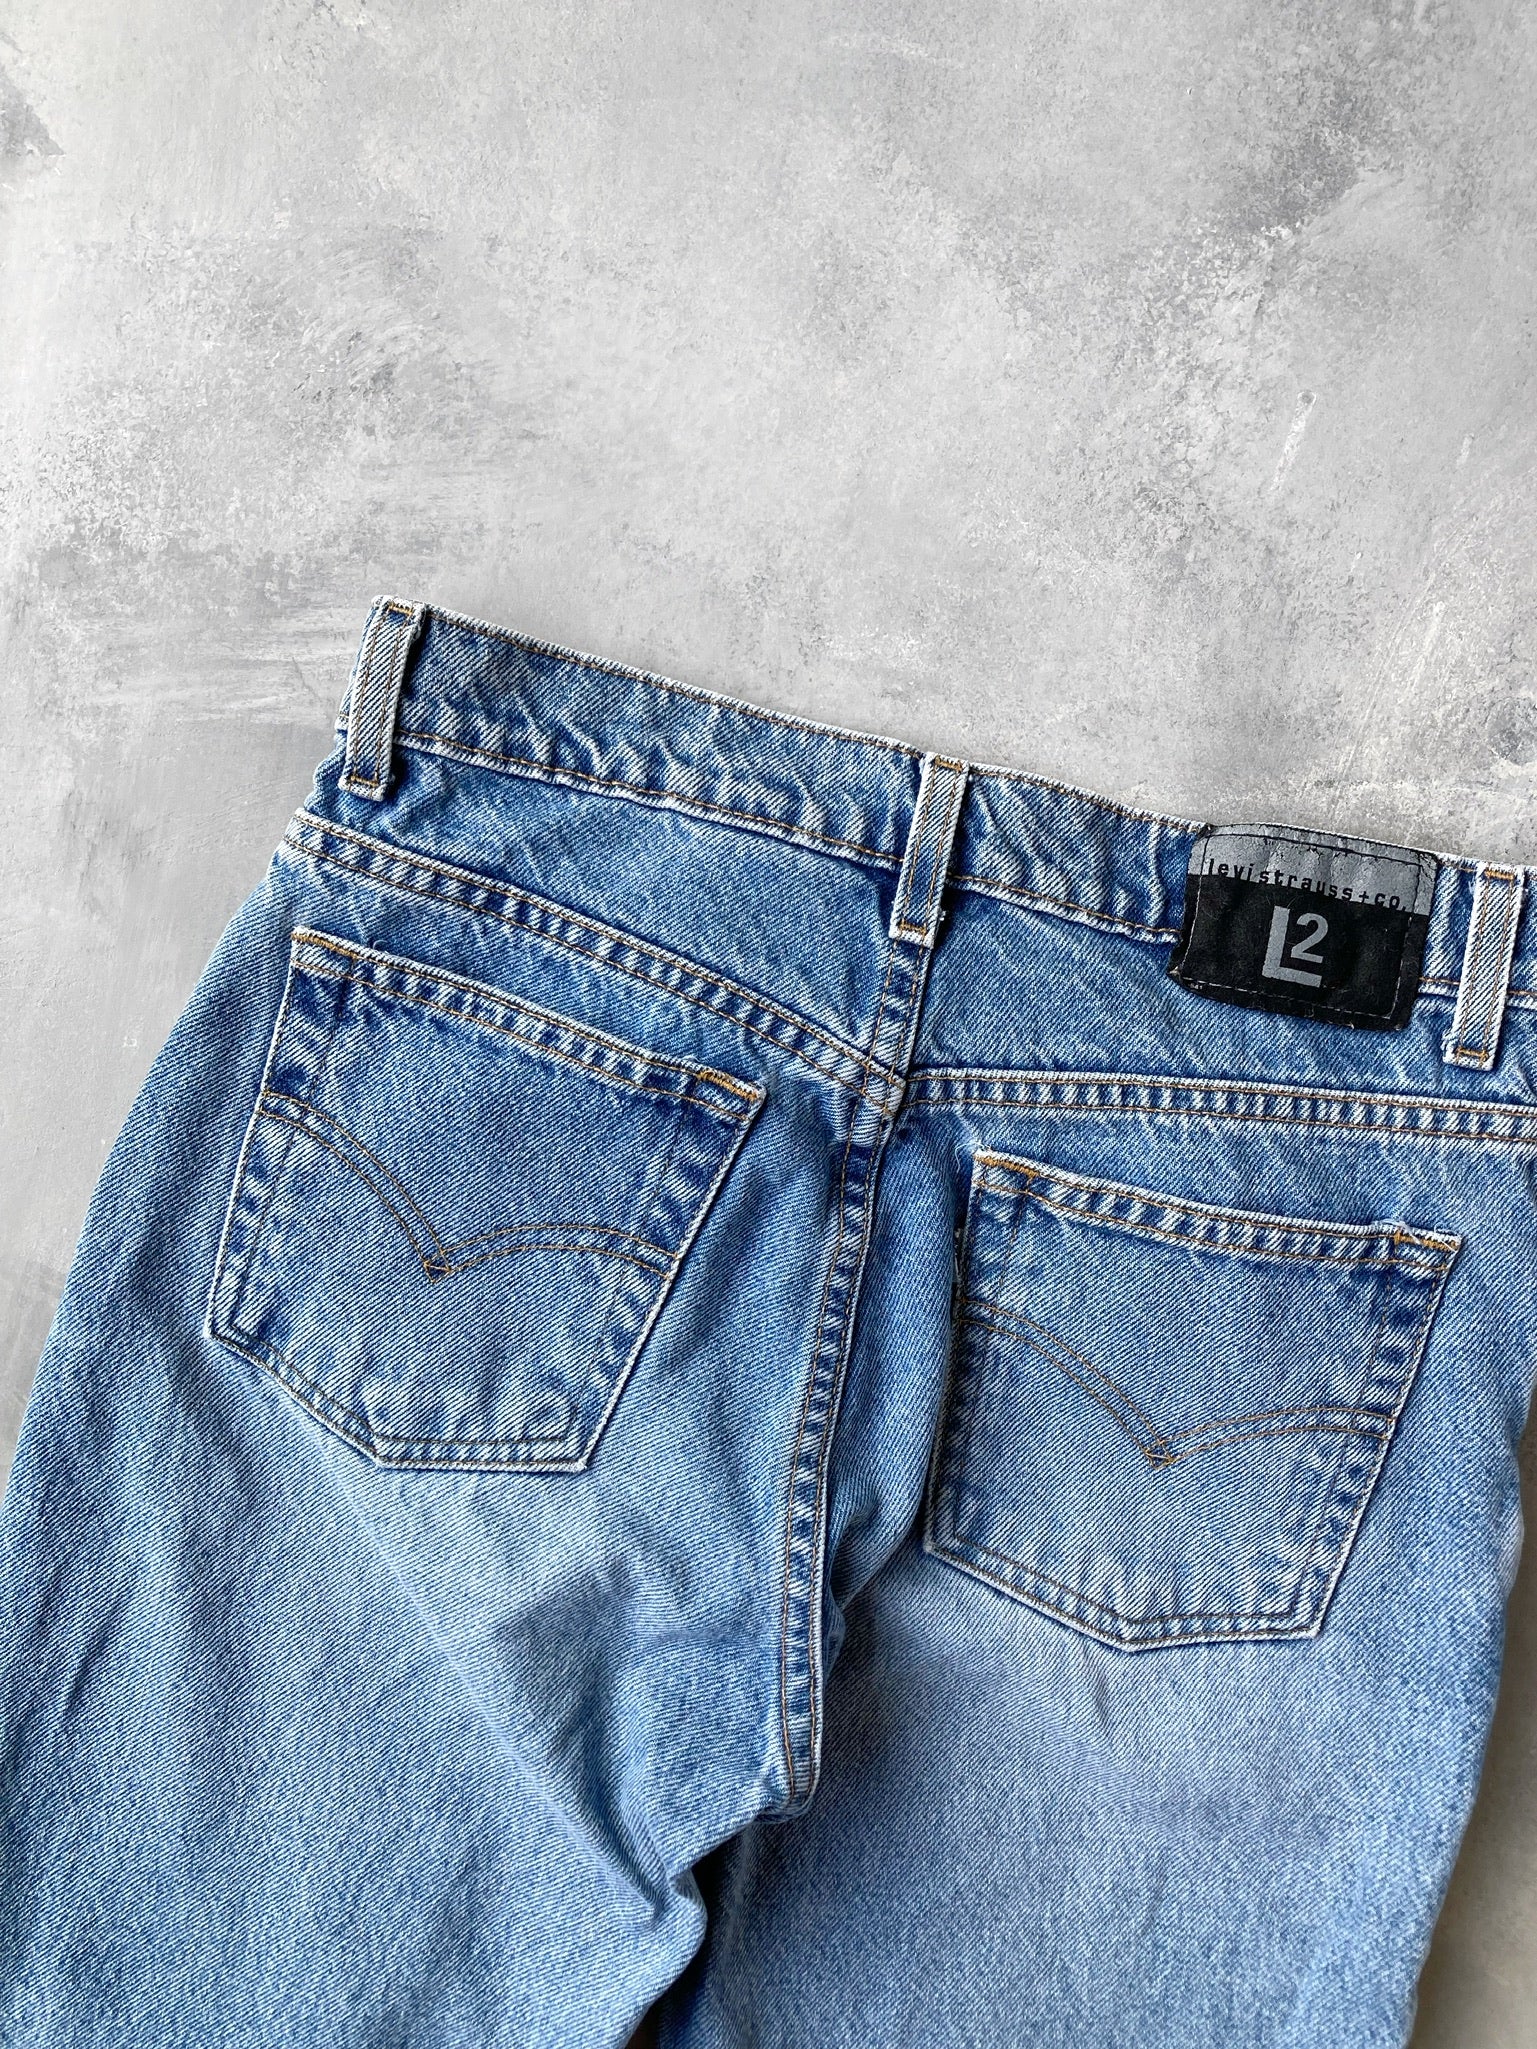 Levi's Silvertab Jeans 90's - 6 – Lot 1 Vintage